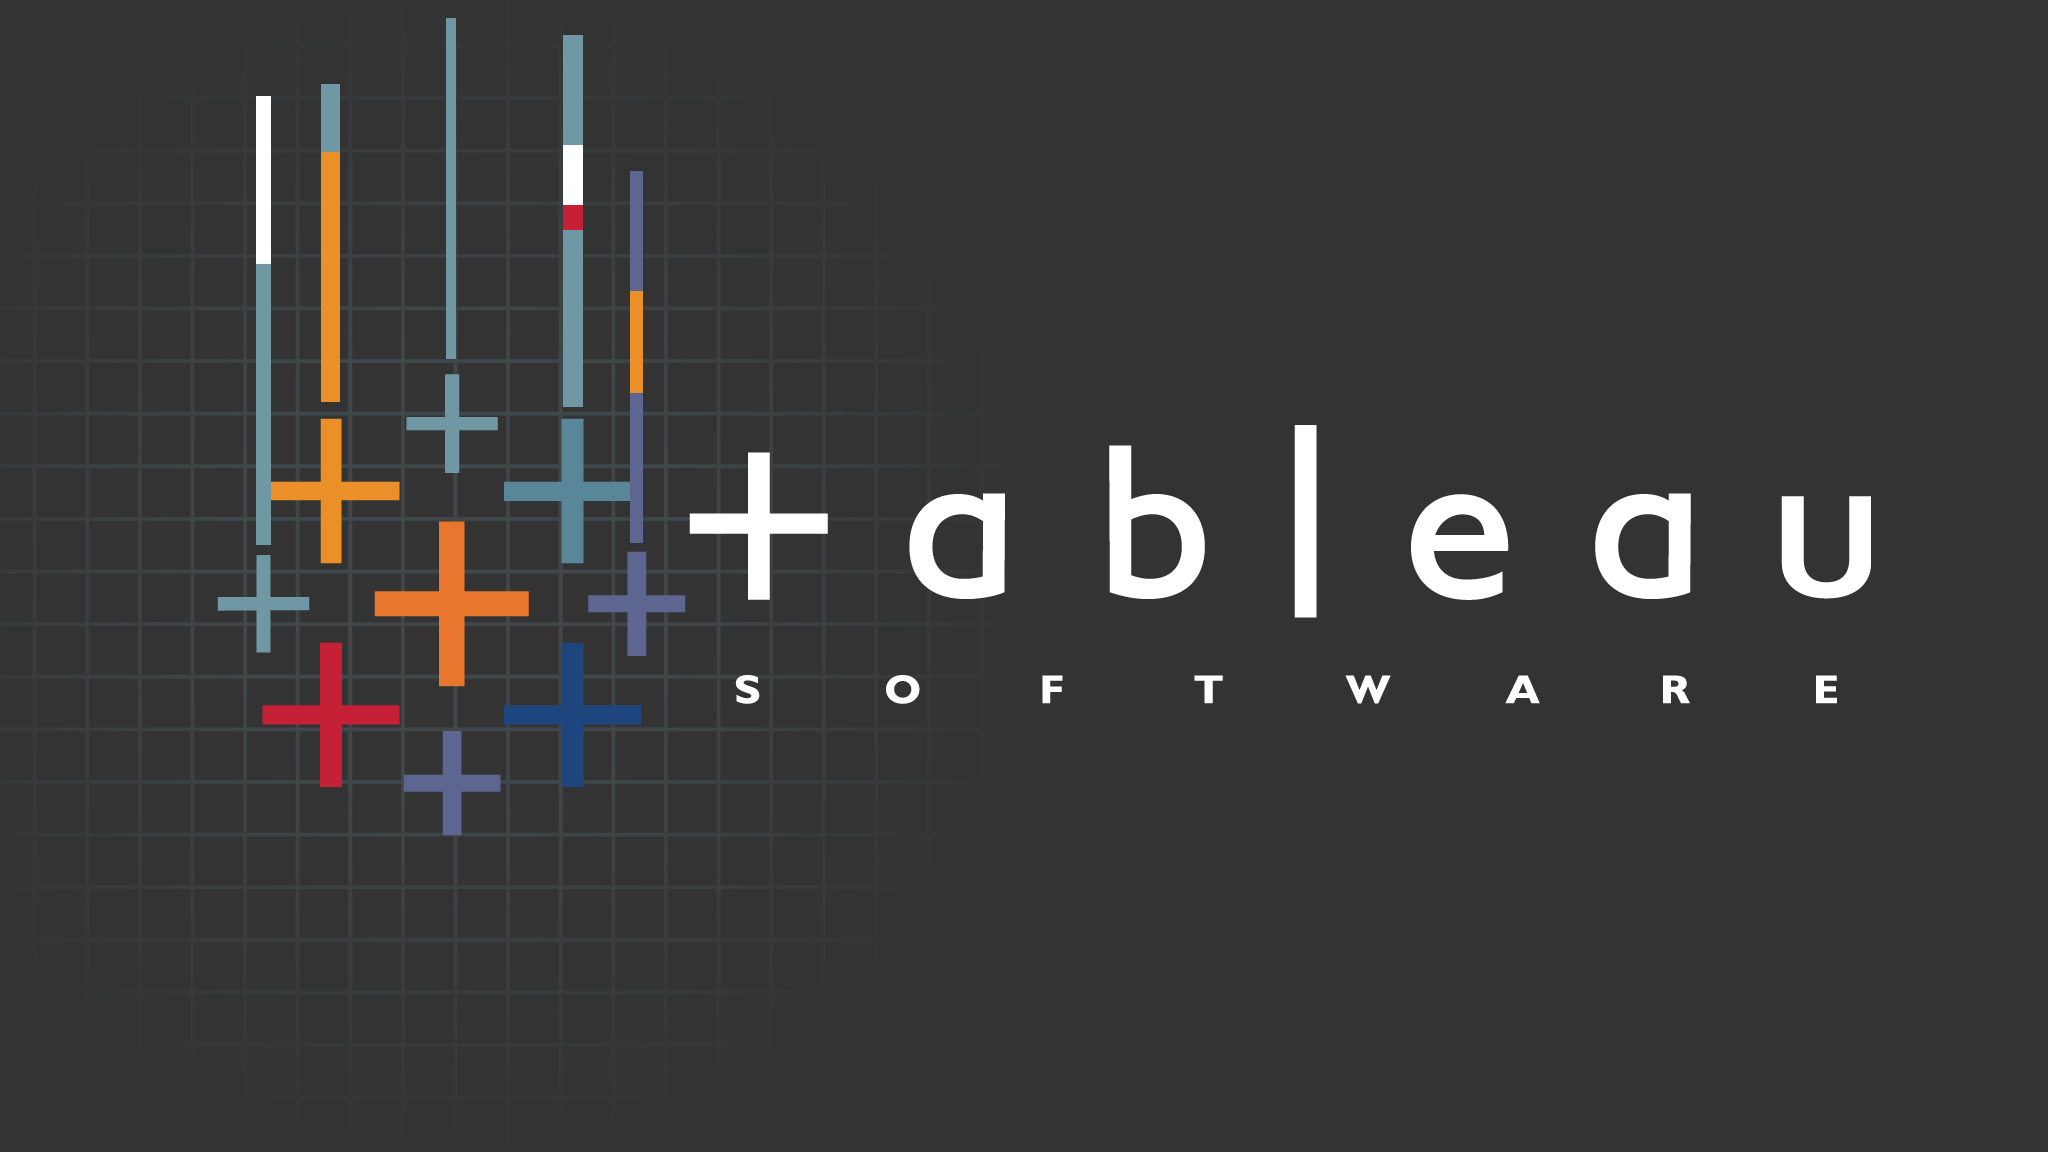 Tableau Desktop 2020 - A Complete Introduction | Academind